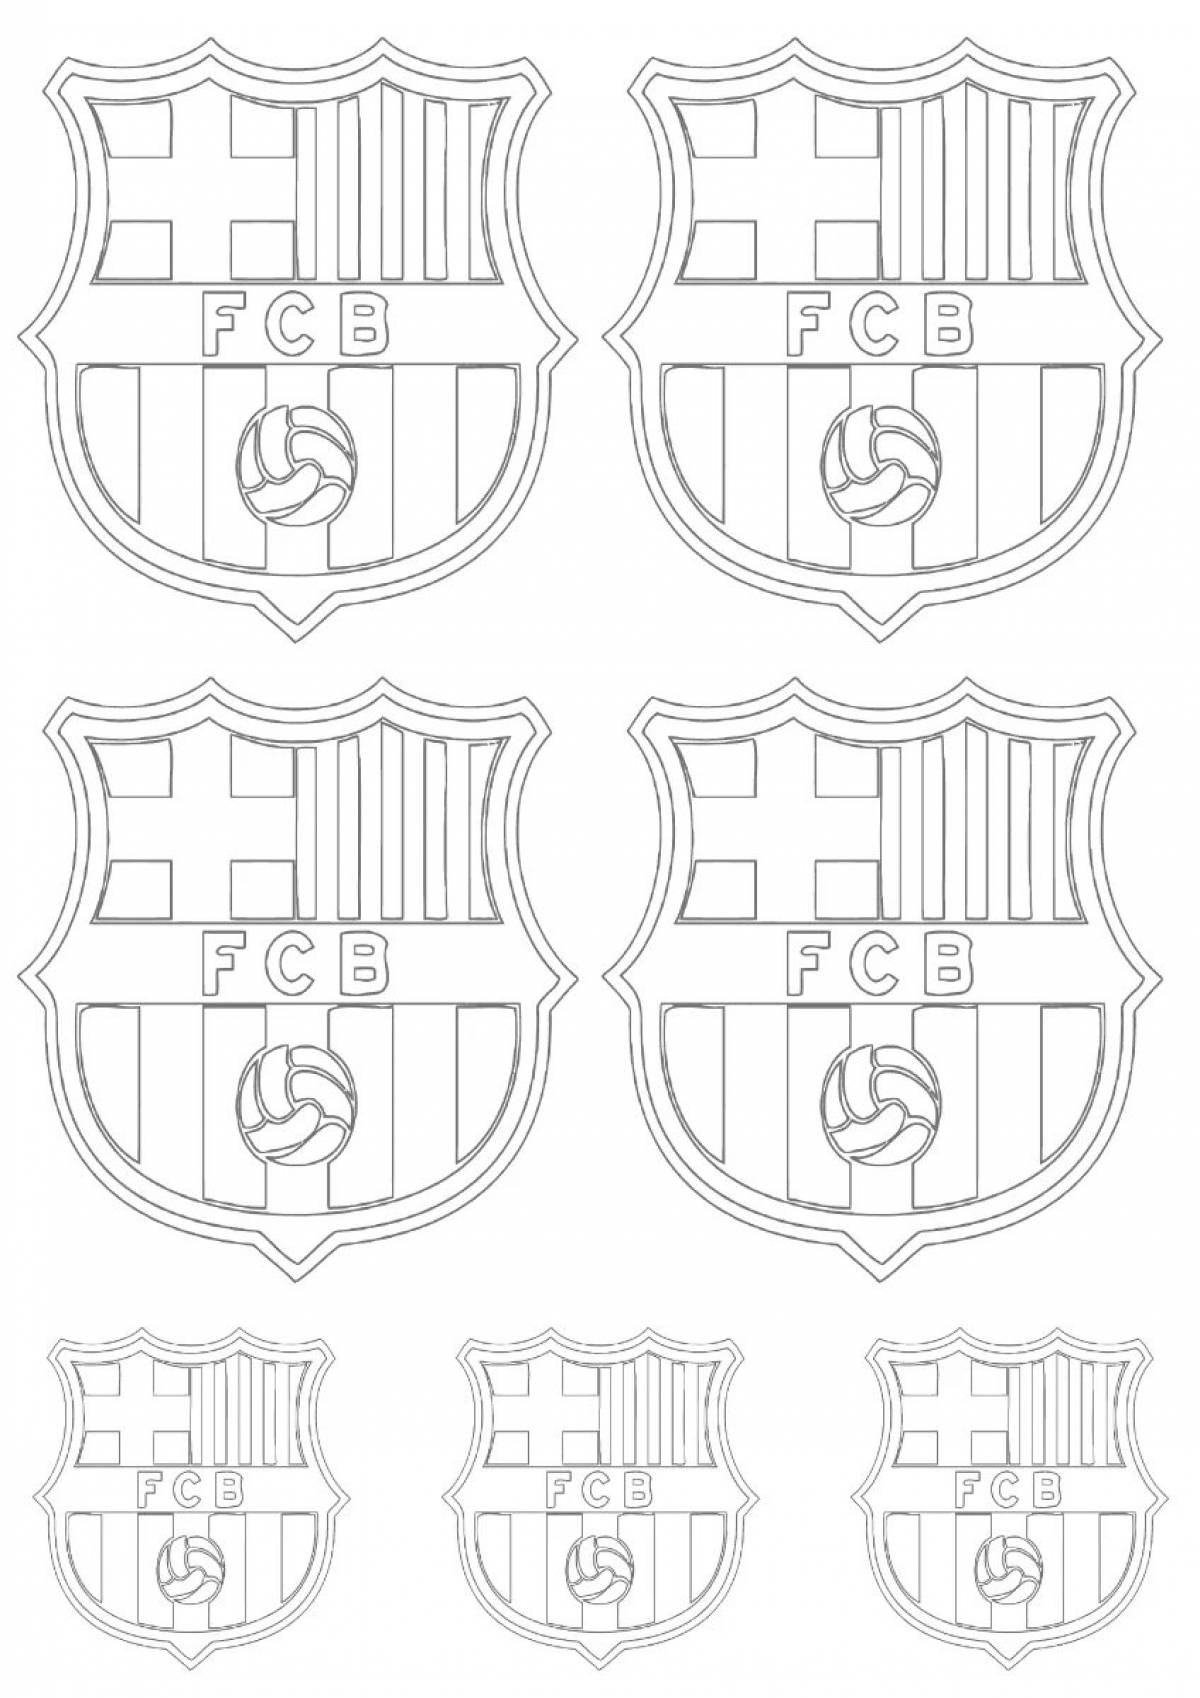 Barcelona emblem #7